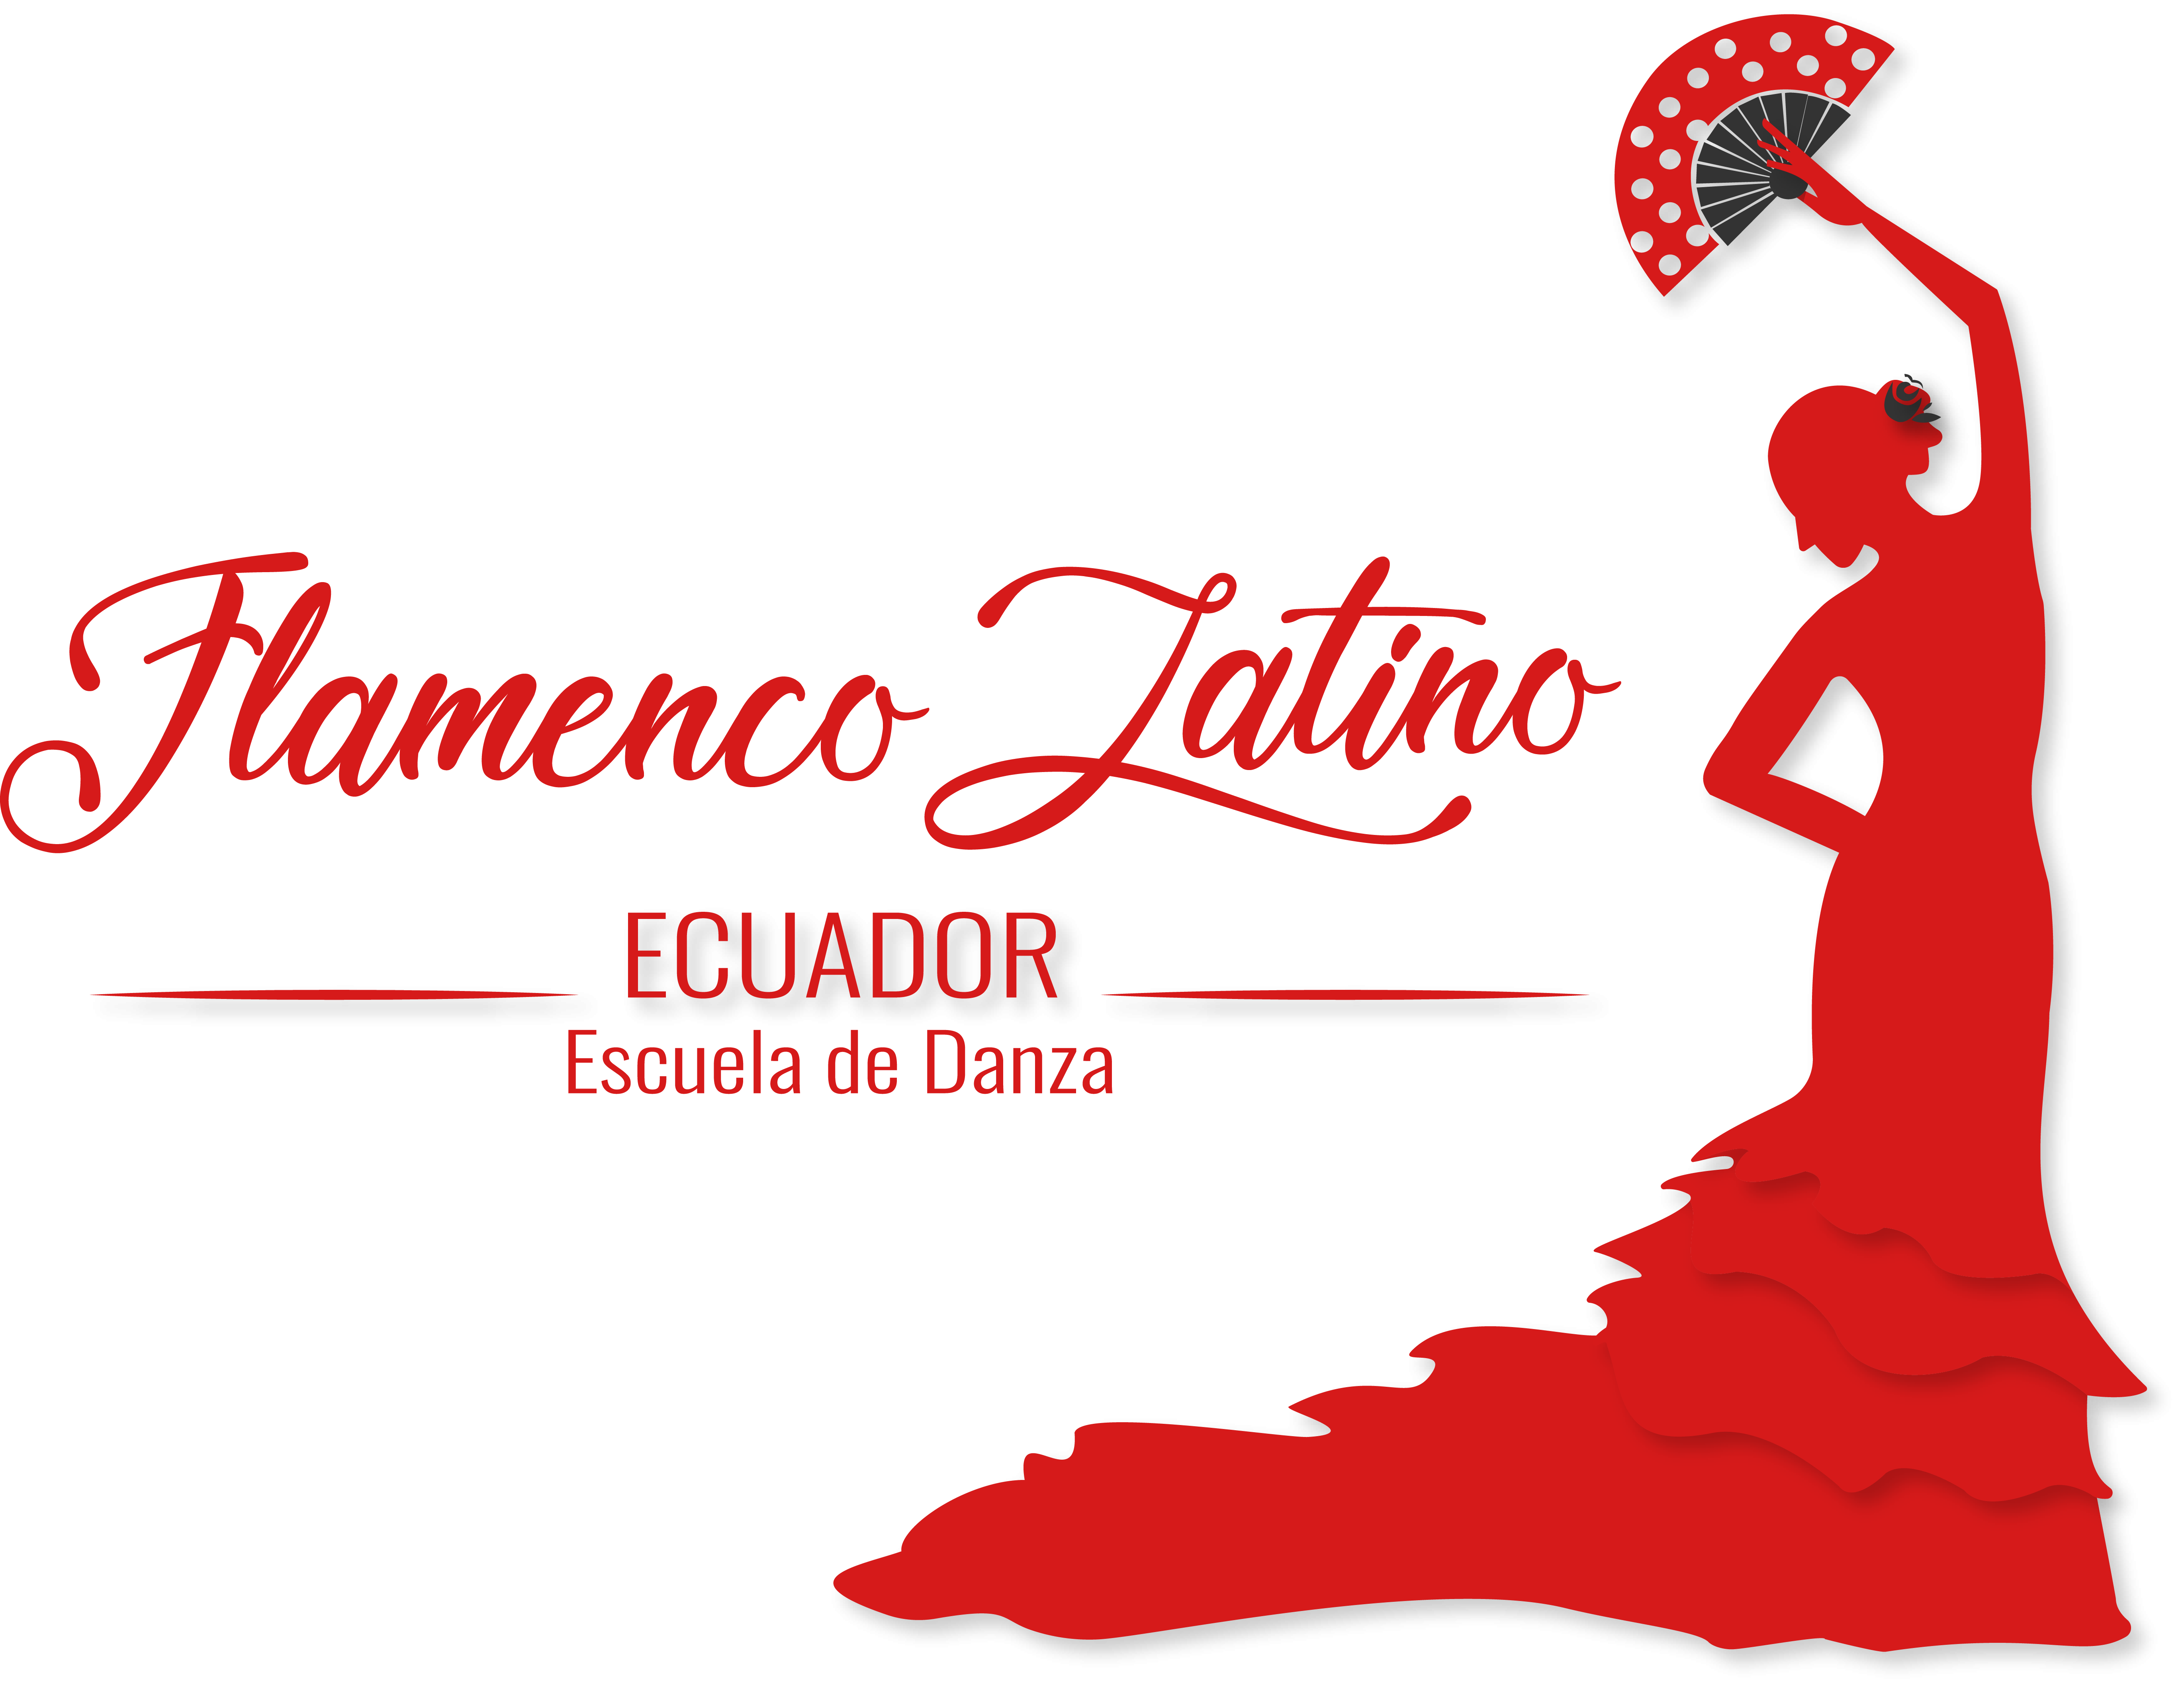 Flamenco Latino Ecuador